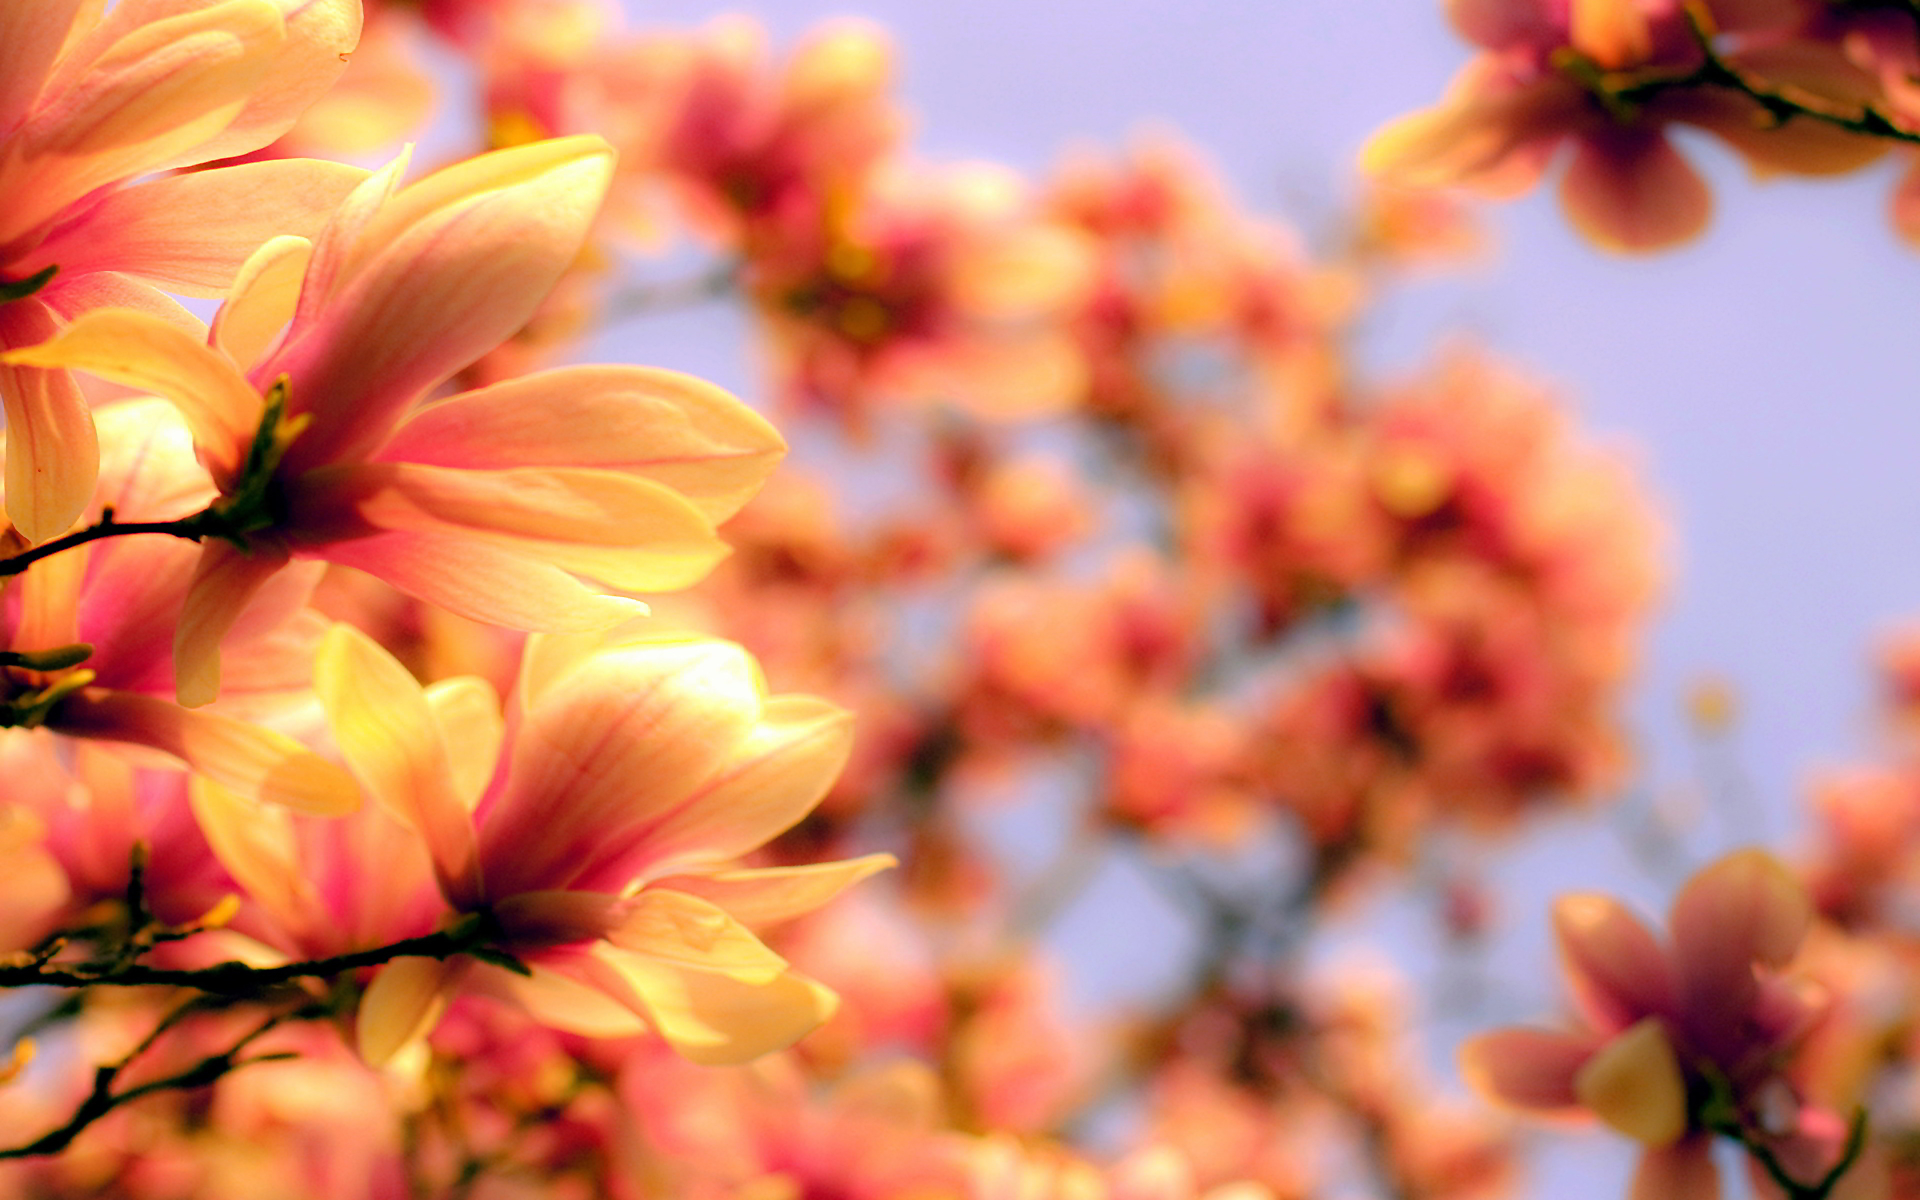 Magnolia flowers blurred